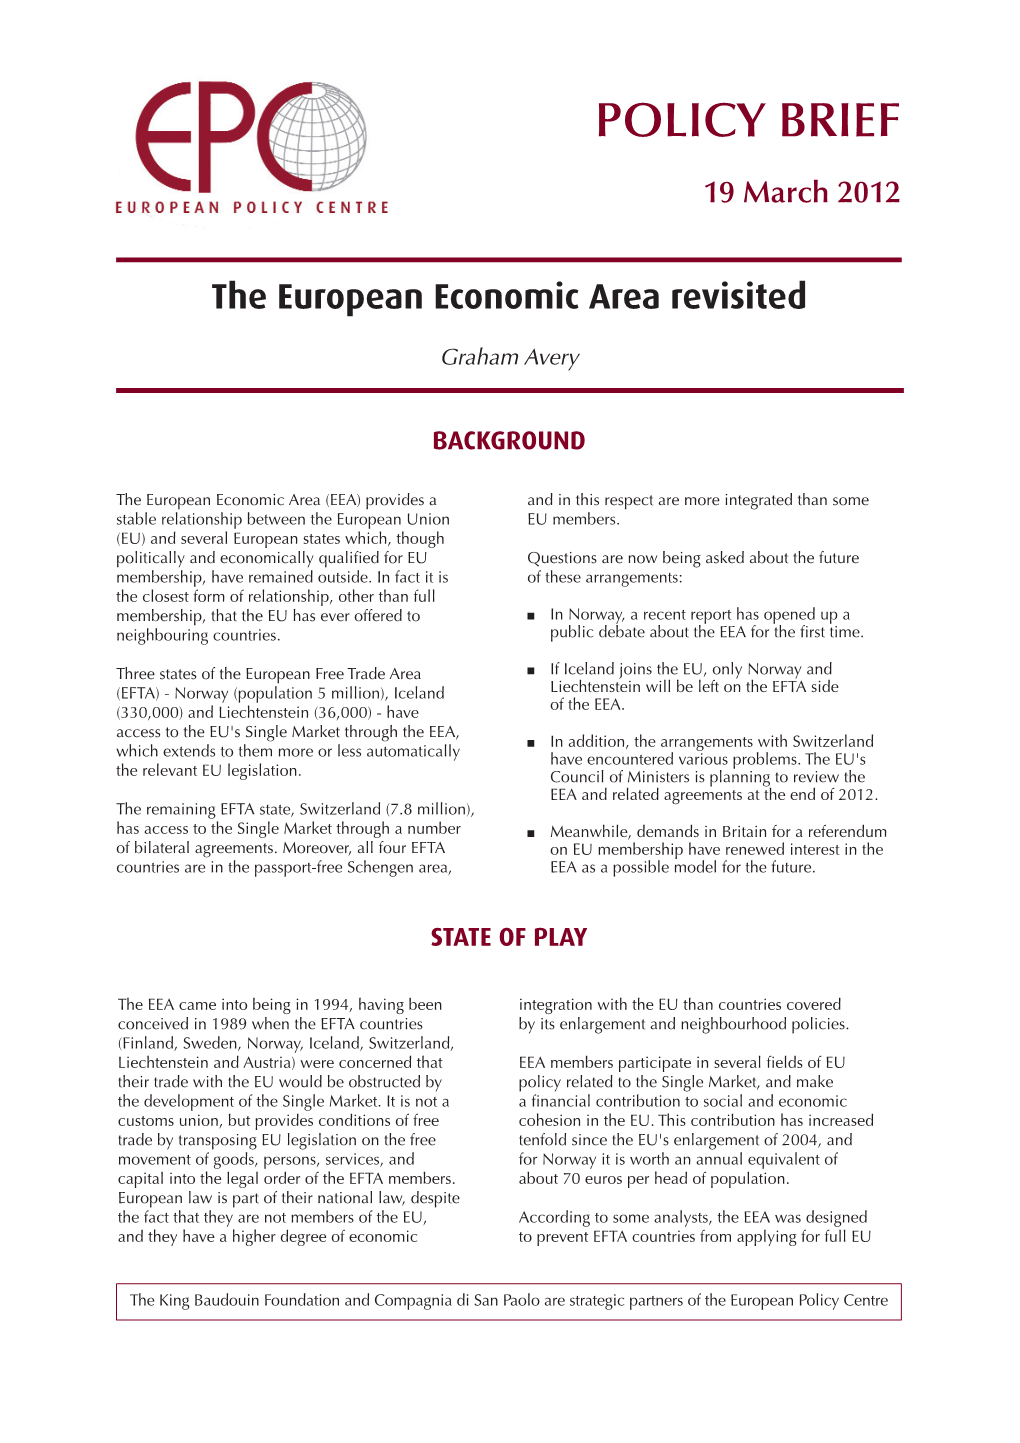 The European Economic Area Revisited